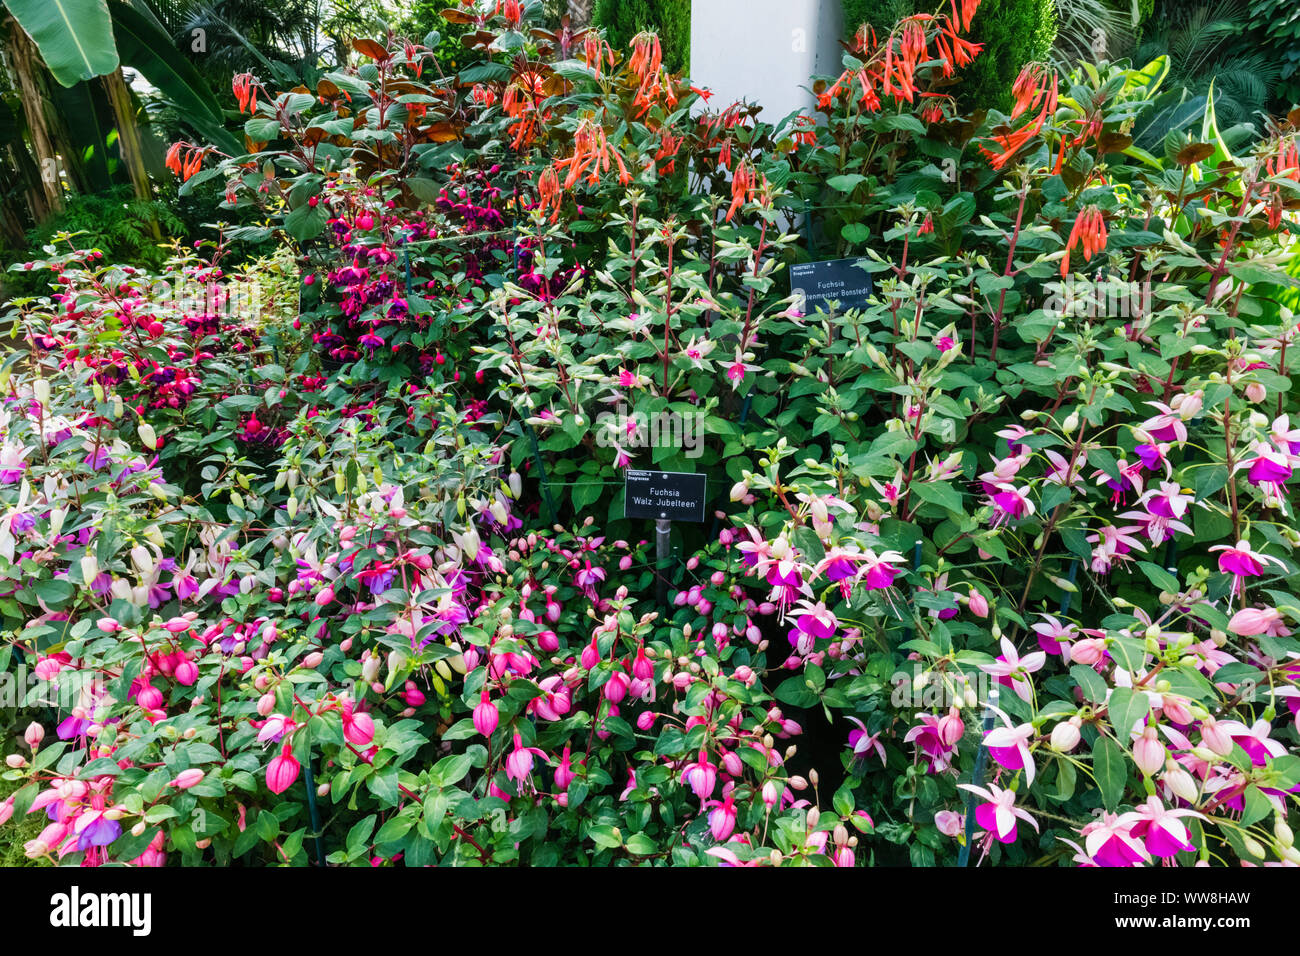 England, Surrey, Guildford, Wisley, The Royal Horticultural Society Garden, Fuchsia Stock Photo